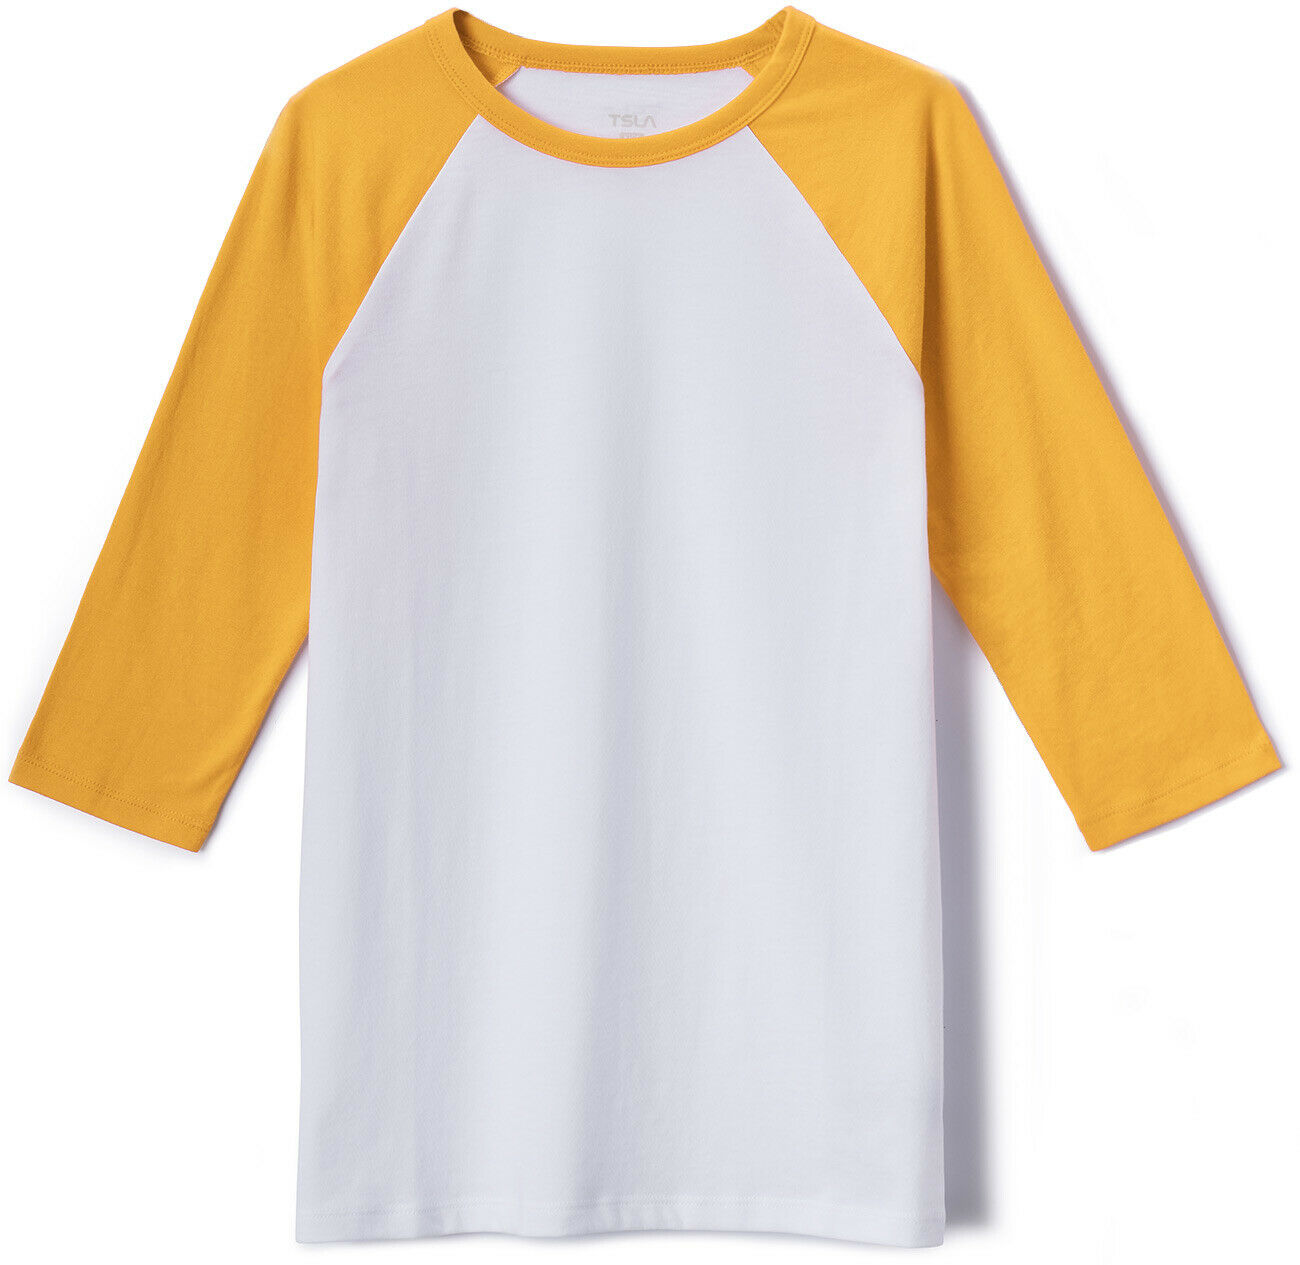 TSLA Kid's 3/4 Sleeve Baseball Jersey Shirts, Casual Dynamic Cotton T-Shirts